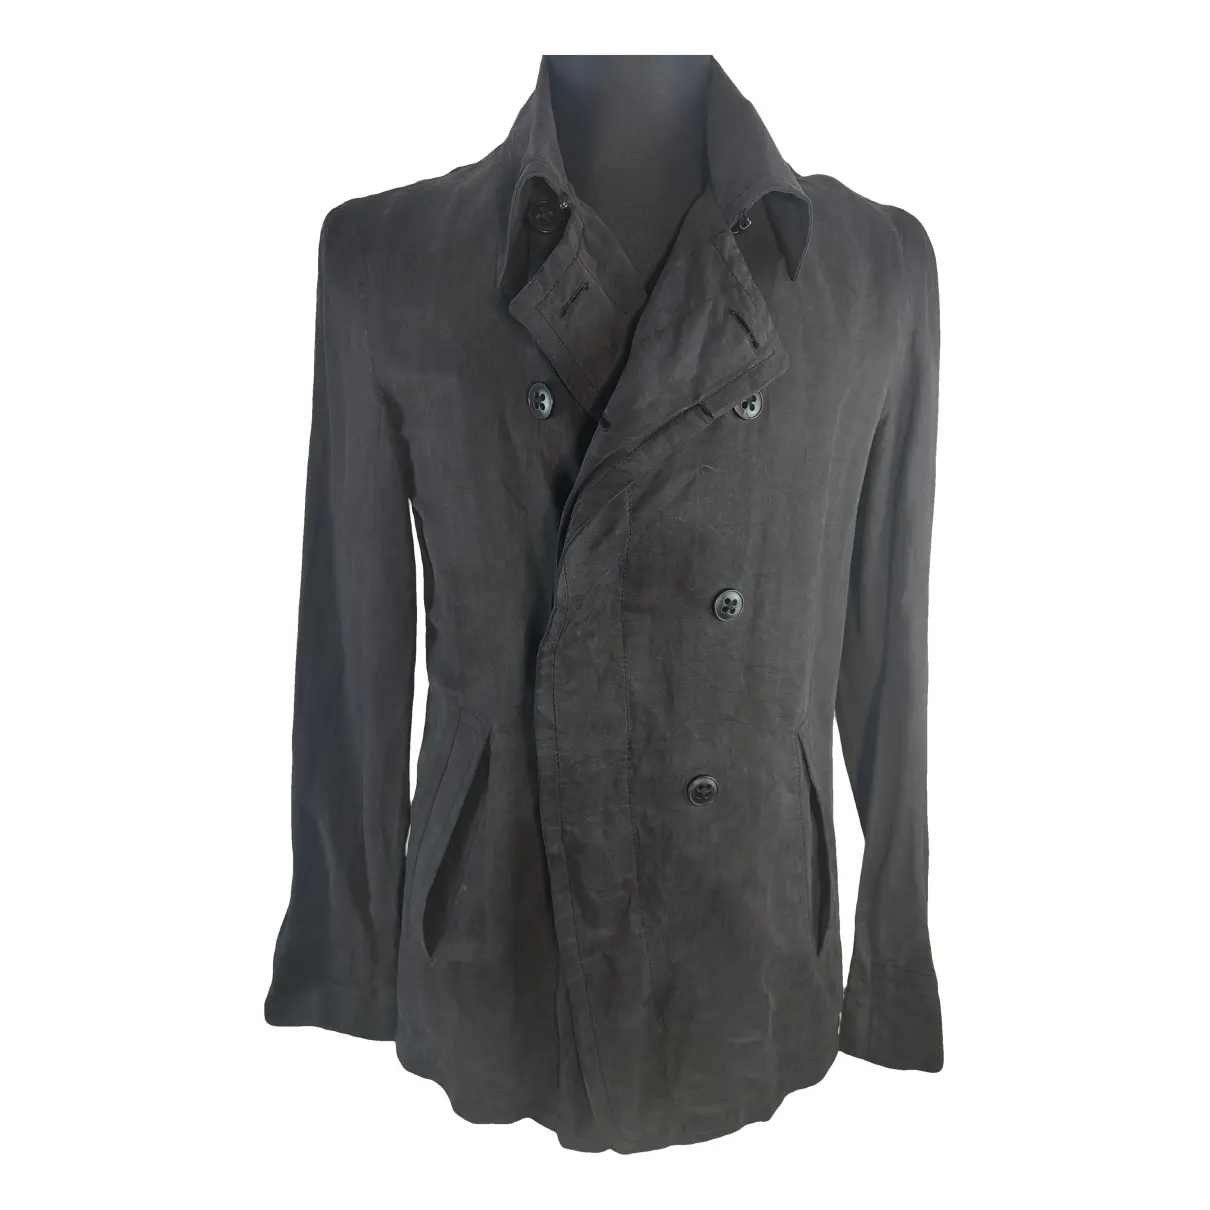 38906105 size Silk in Black - Ann S Demeulemeester vest International Silk